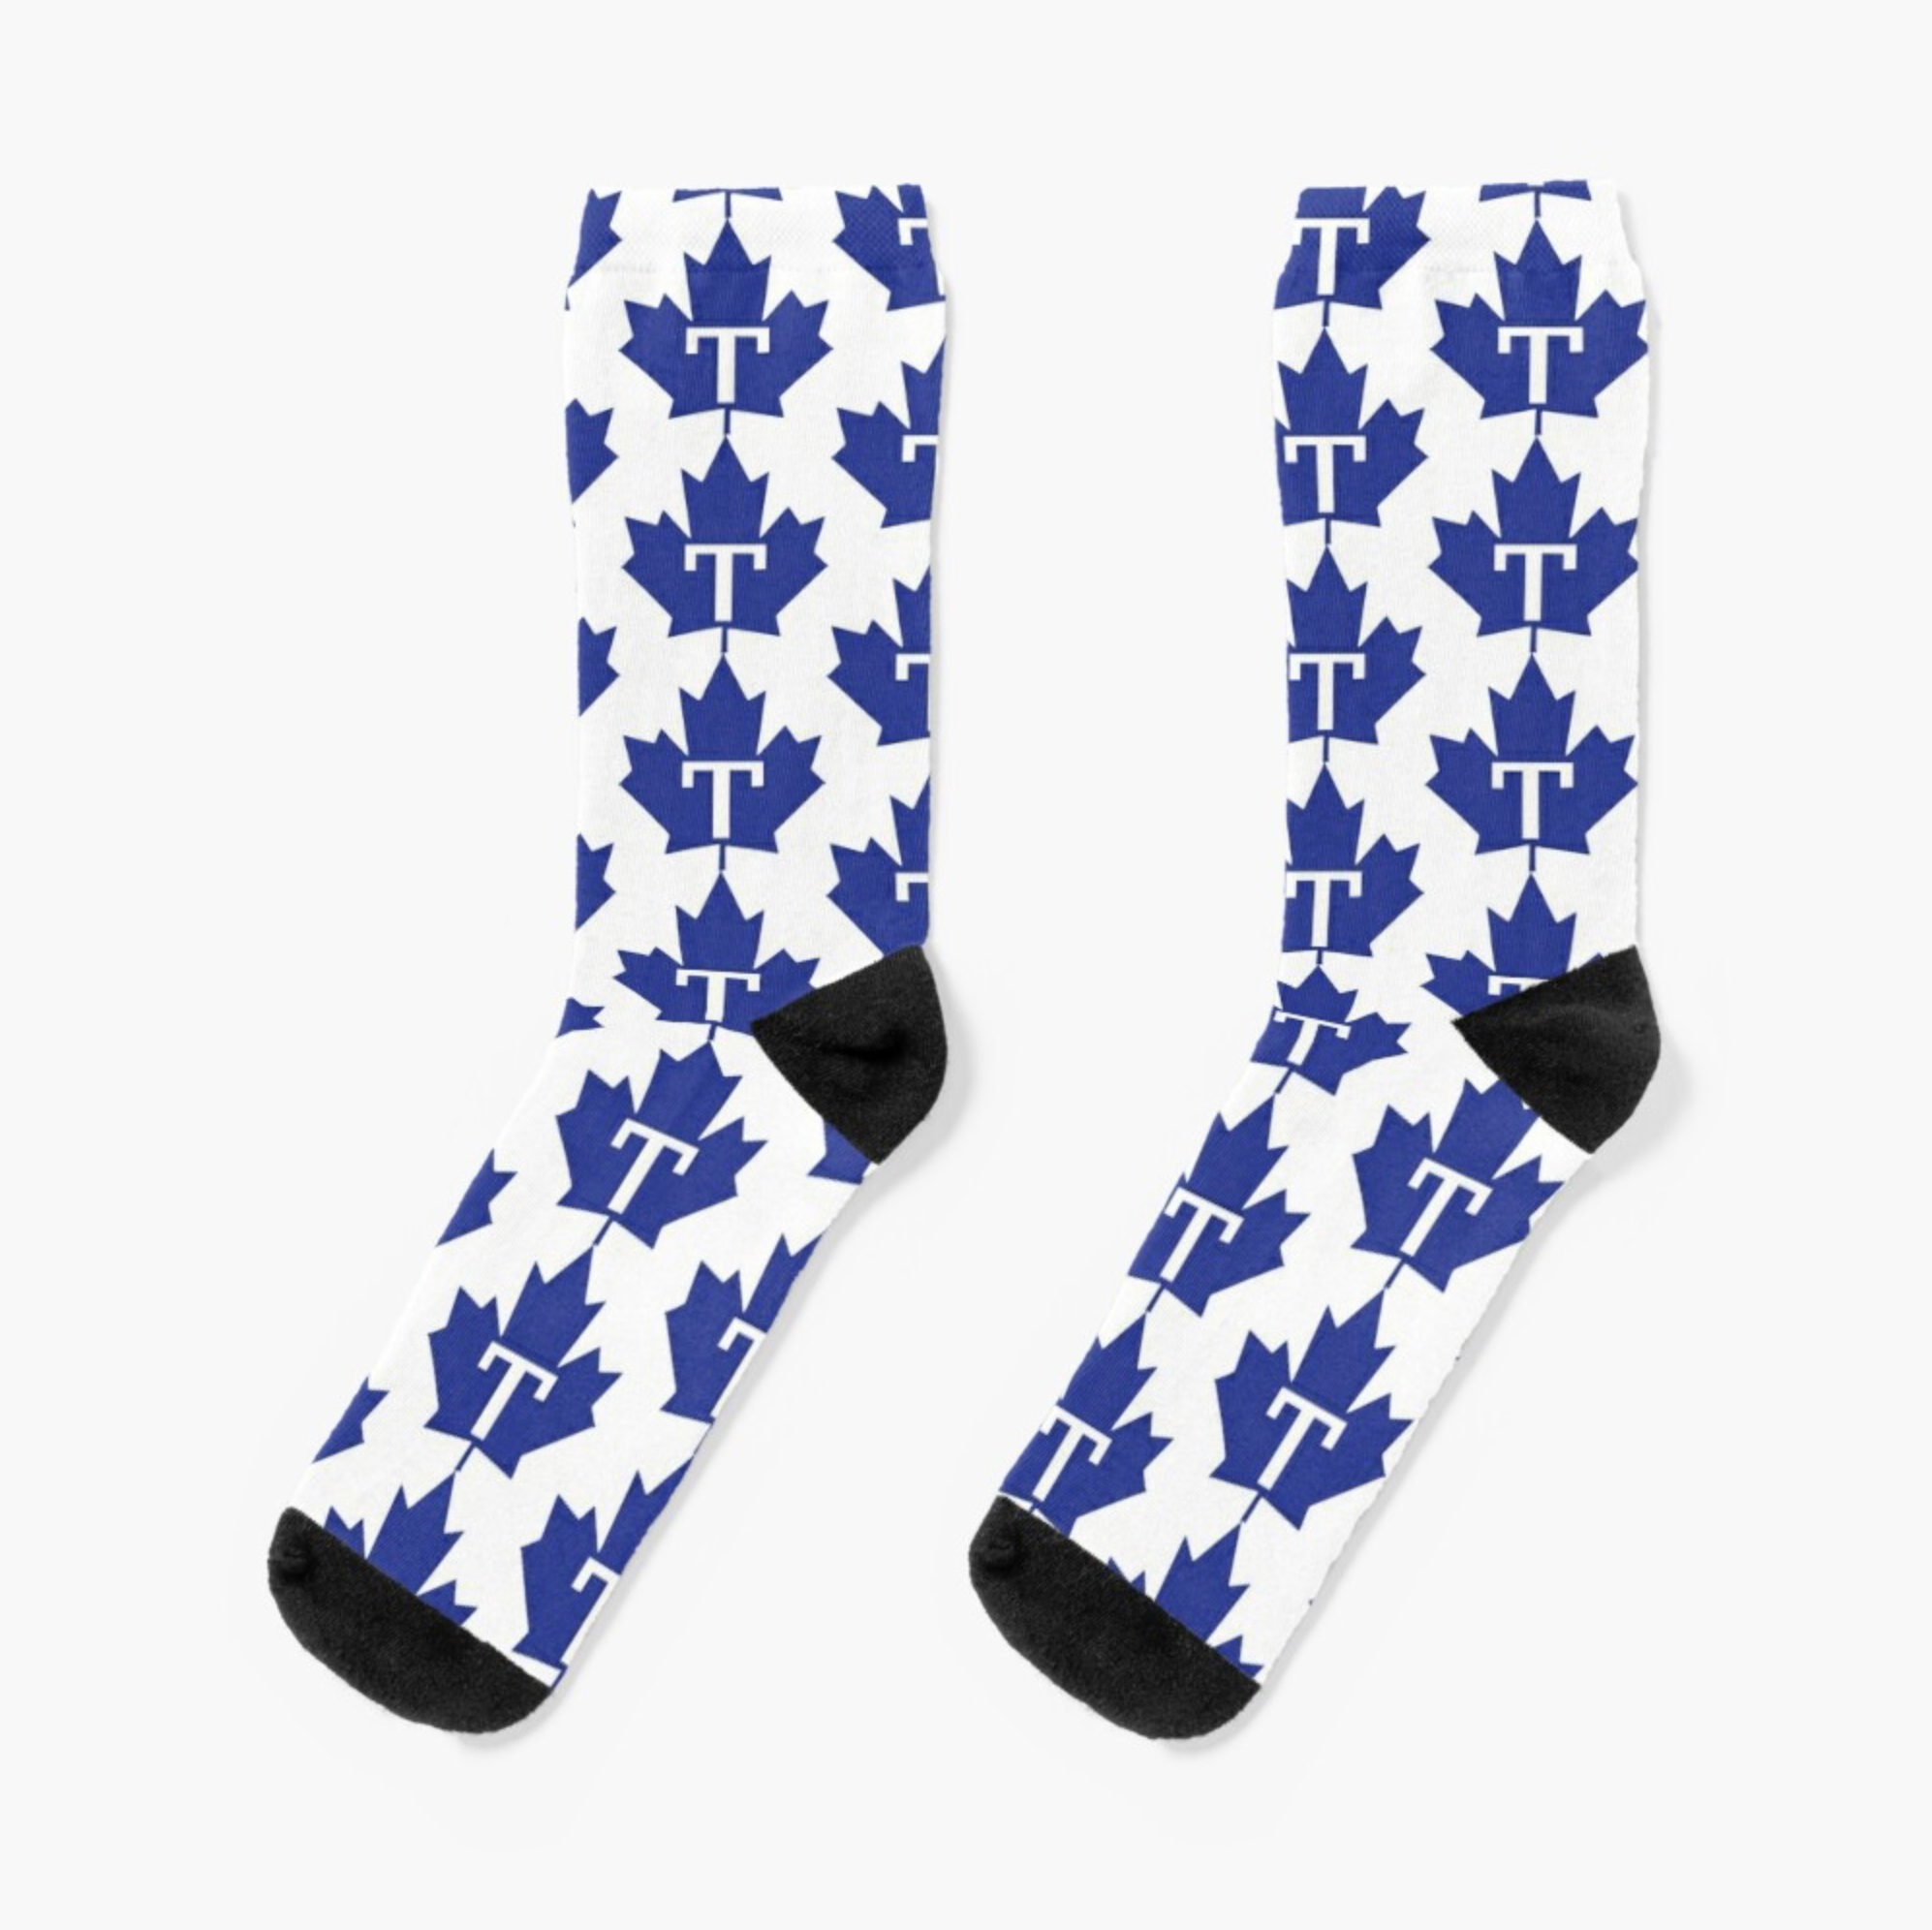 Toronto Maple Leafs sock four